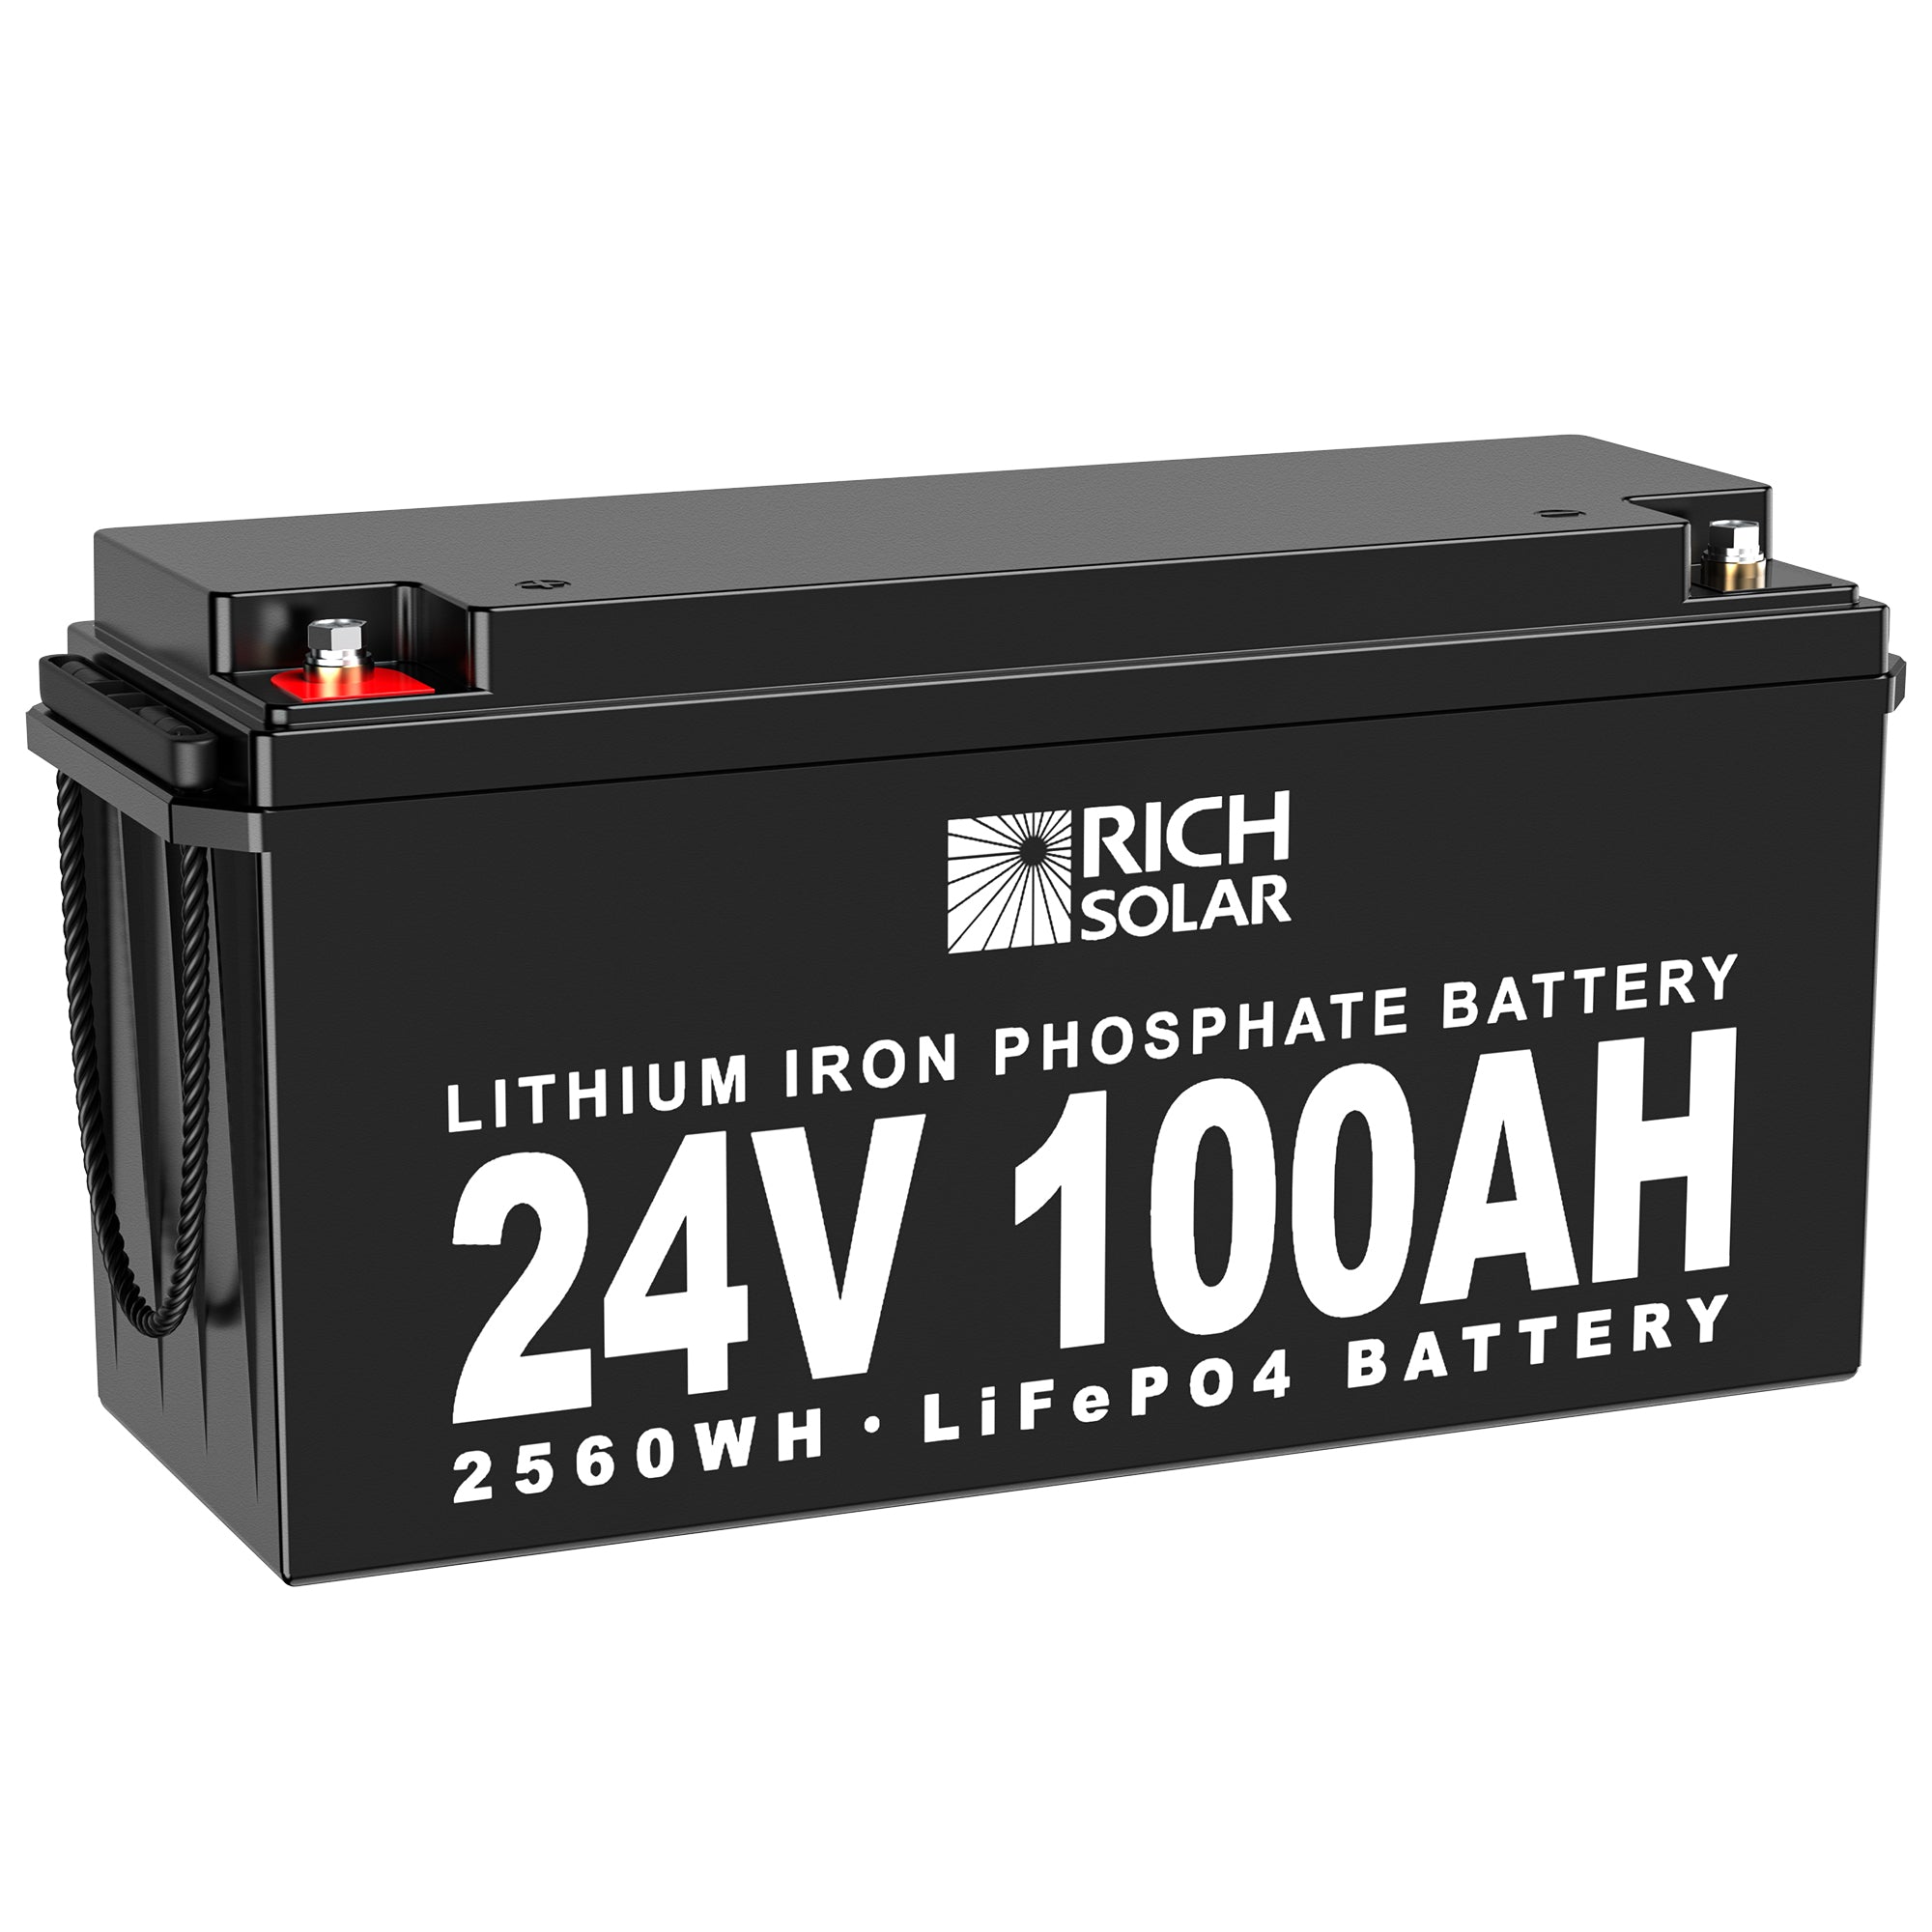 24V 100Ah LiFePO4 Lithium Iron Phosphate Battery - RICH SOLAR